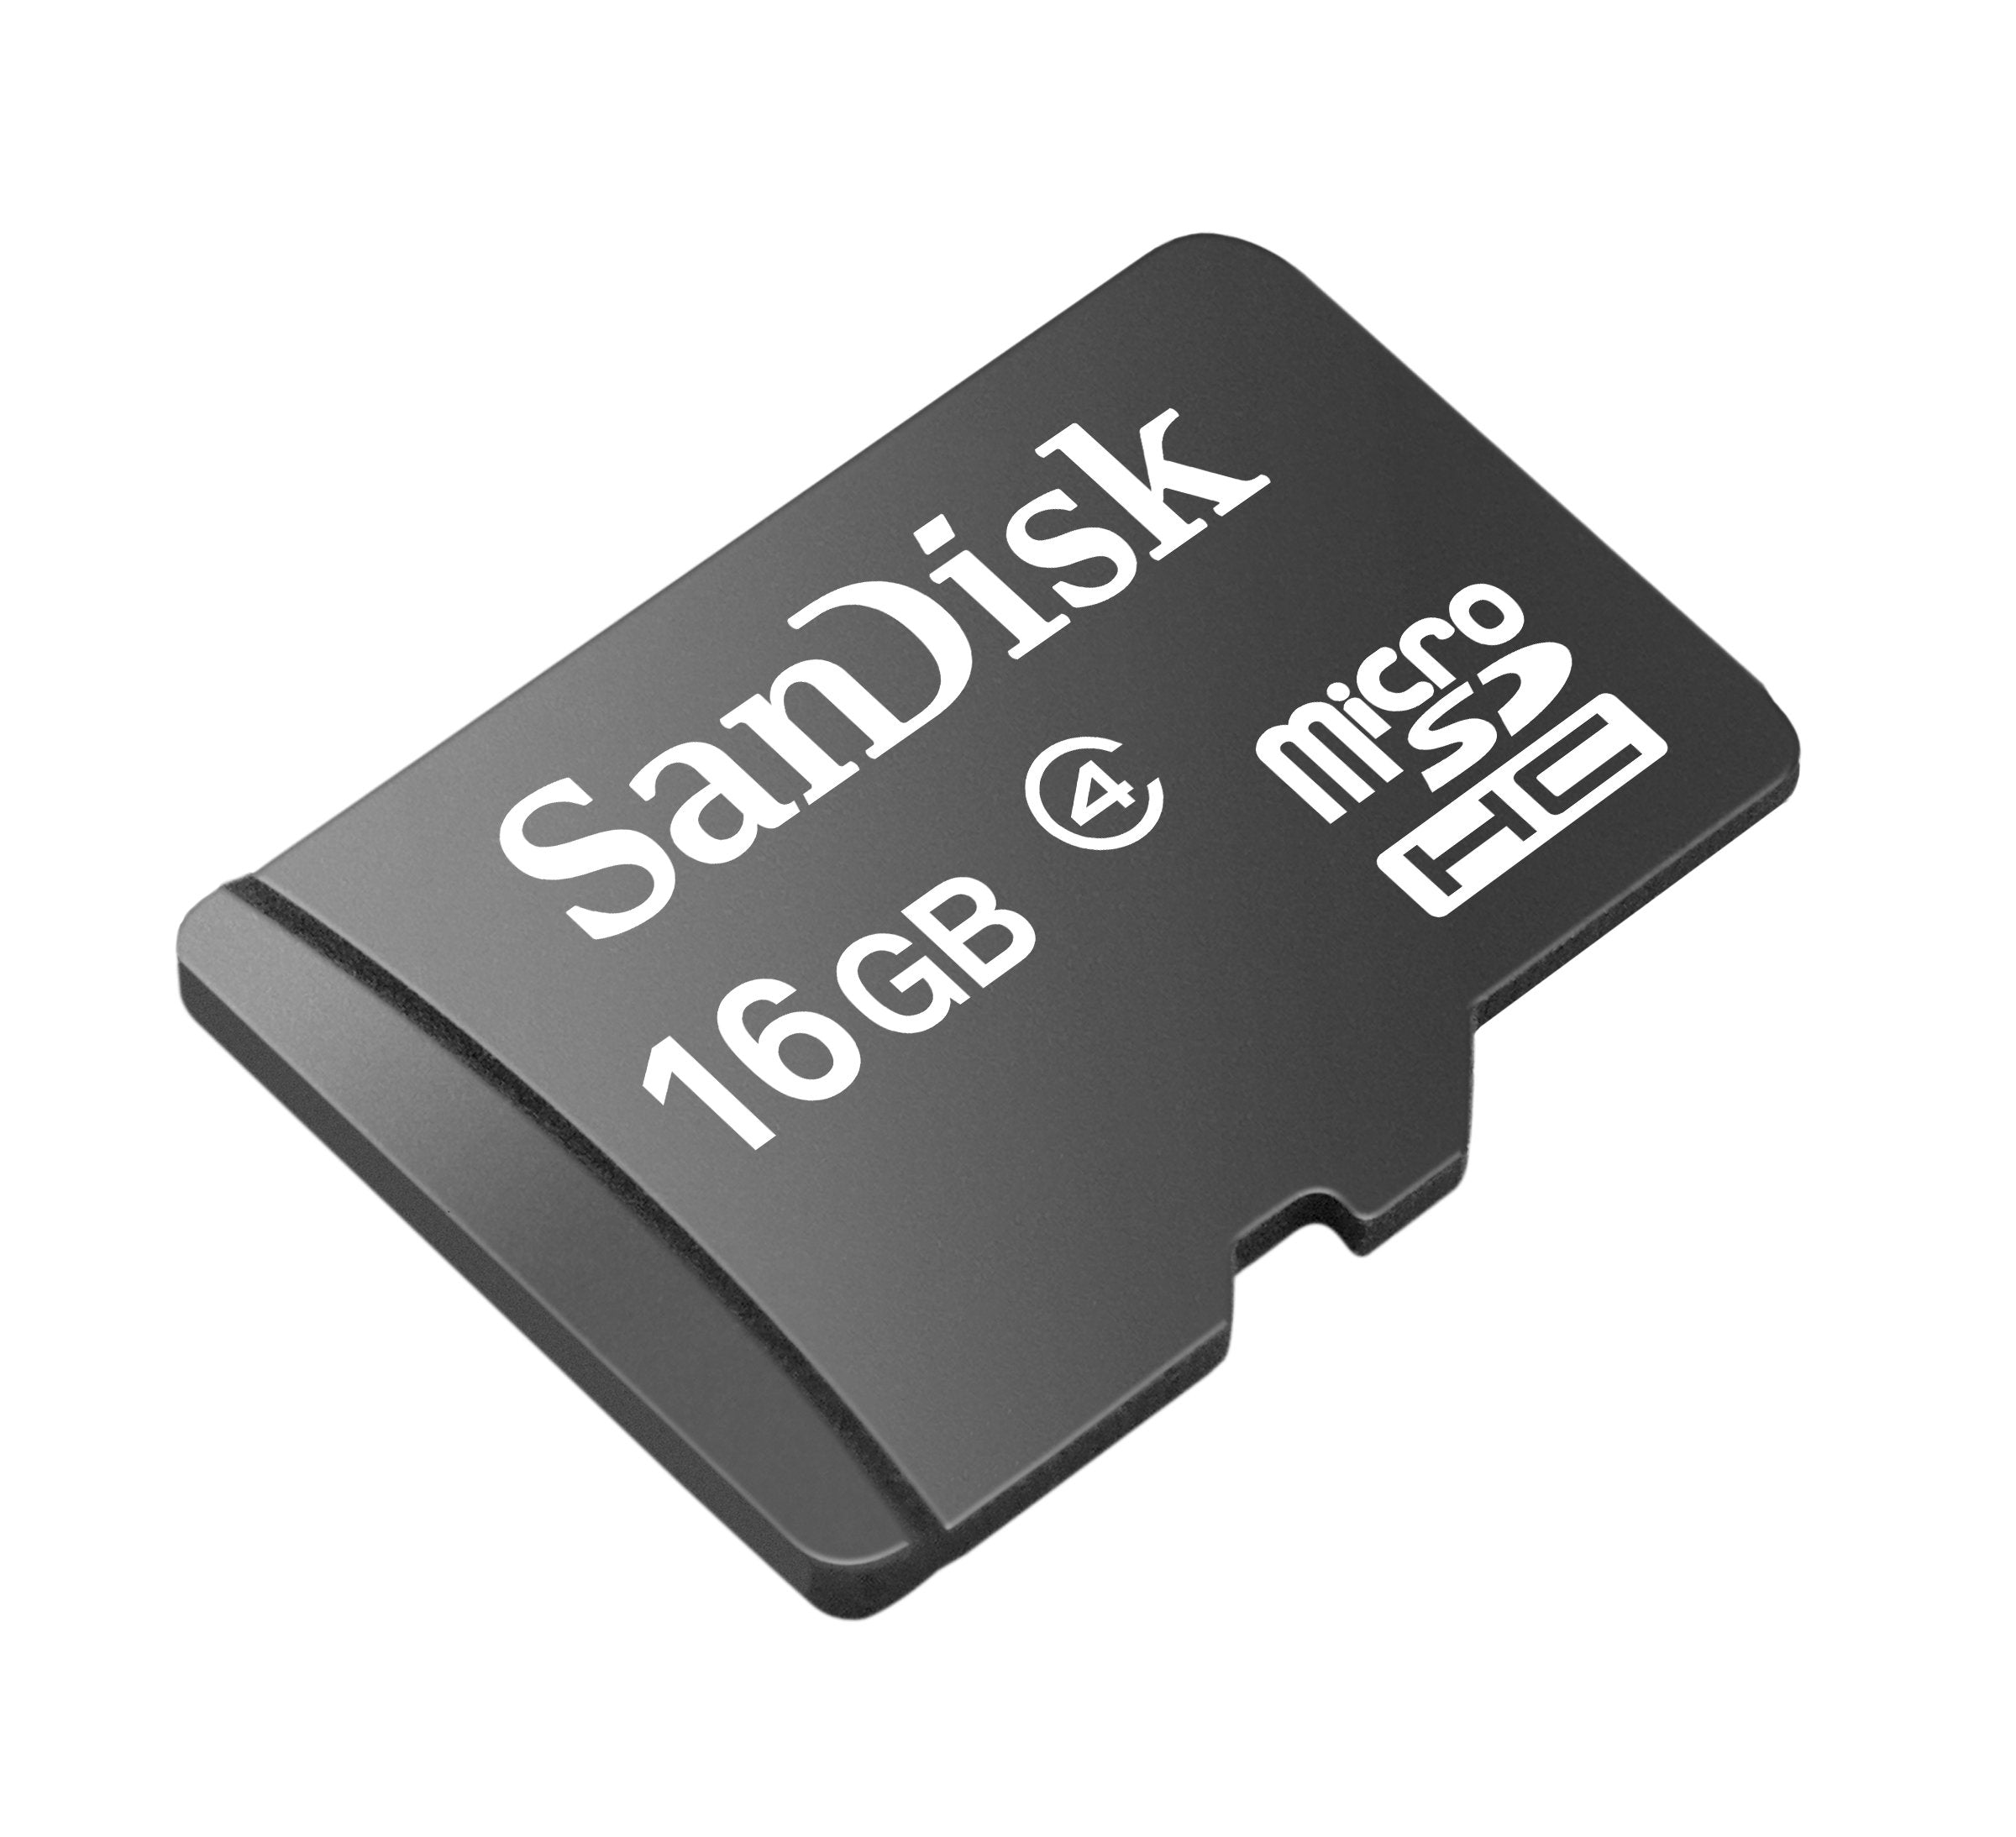 SanDisk 16GB microSDHC Card (SDSDQ-016G-A11M)